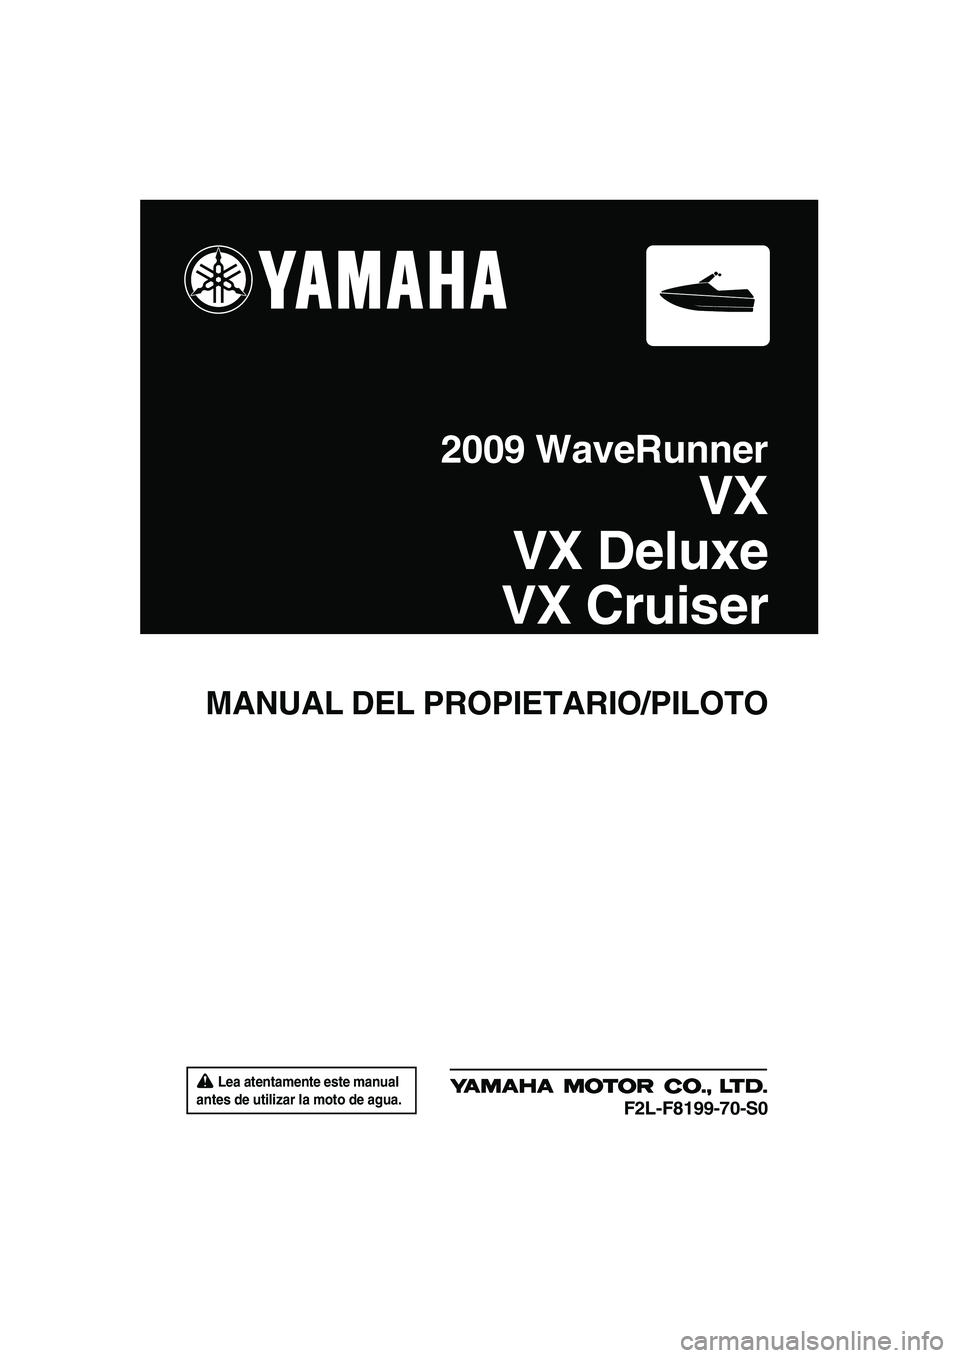 YAMAHA VX SPORT 2009  Manuale de Empleo (in Spanish)  Lea atentamente este manual 
antes de utilizar la moto de agua.
MANUAL DEL PROPIETARIO/PILOTO
2009 WaveRunner
VX
VX Deluxe
VX Cruiser
F2L-F8199-70-S0
UF2L70S0.book  Page 1  Tuesday, June 24, 2008  9: